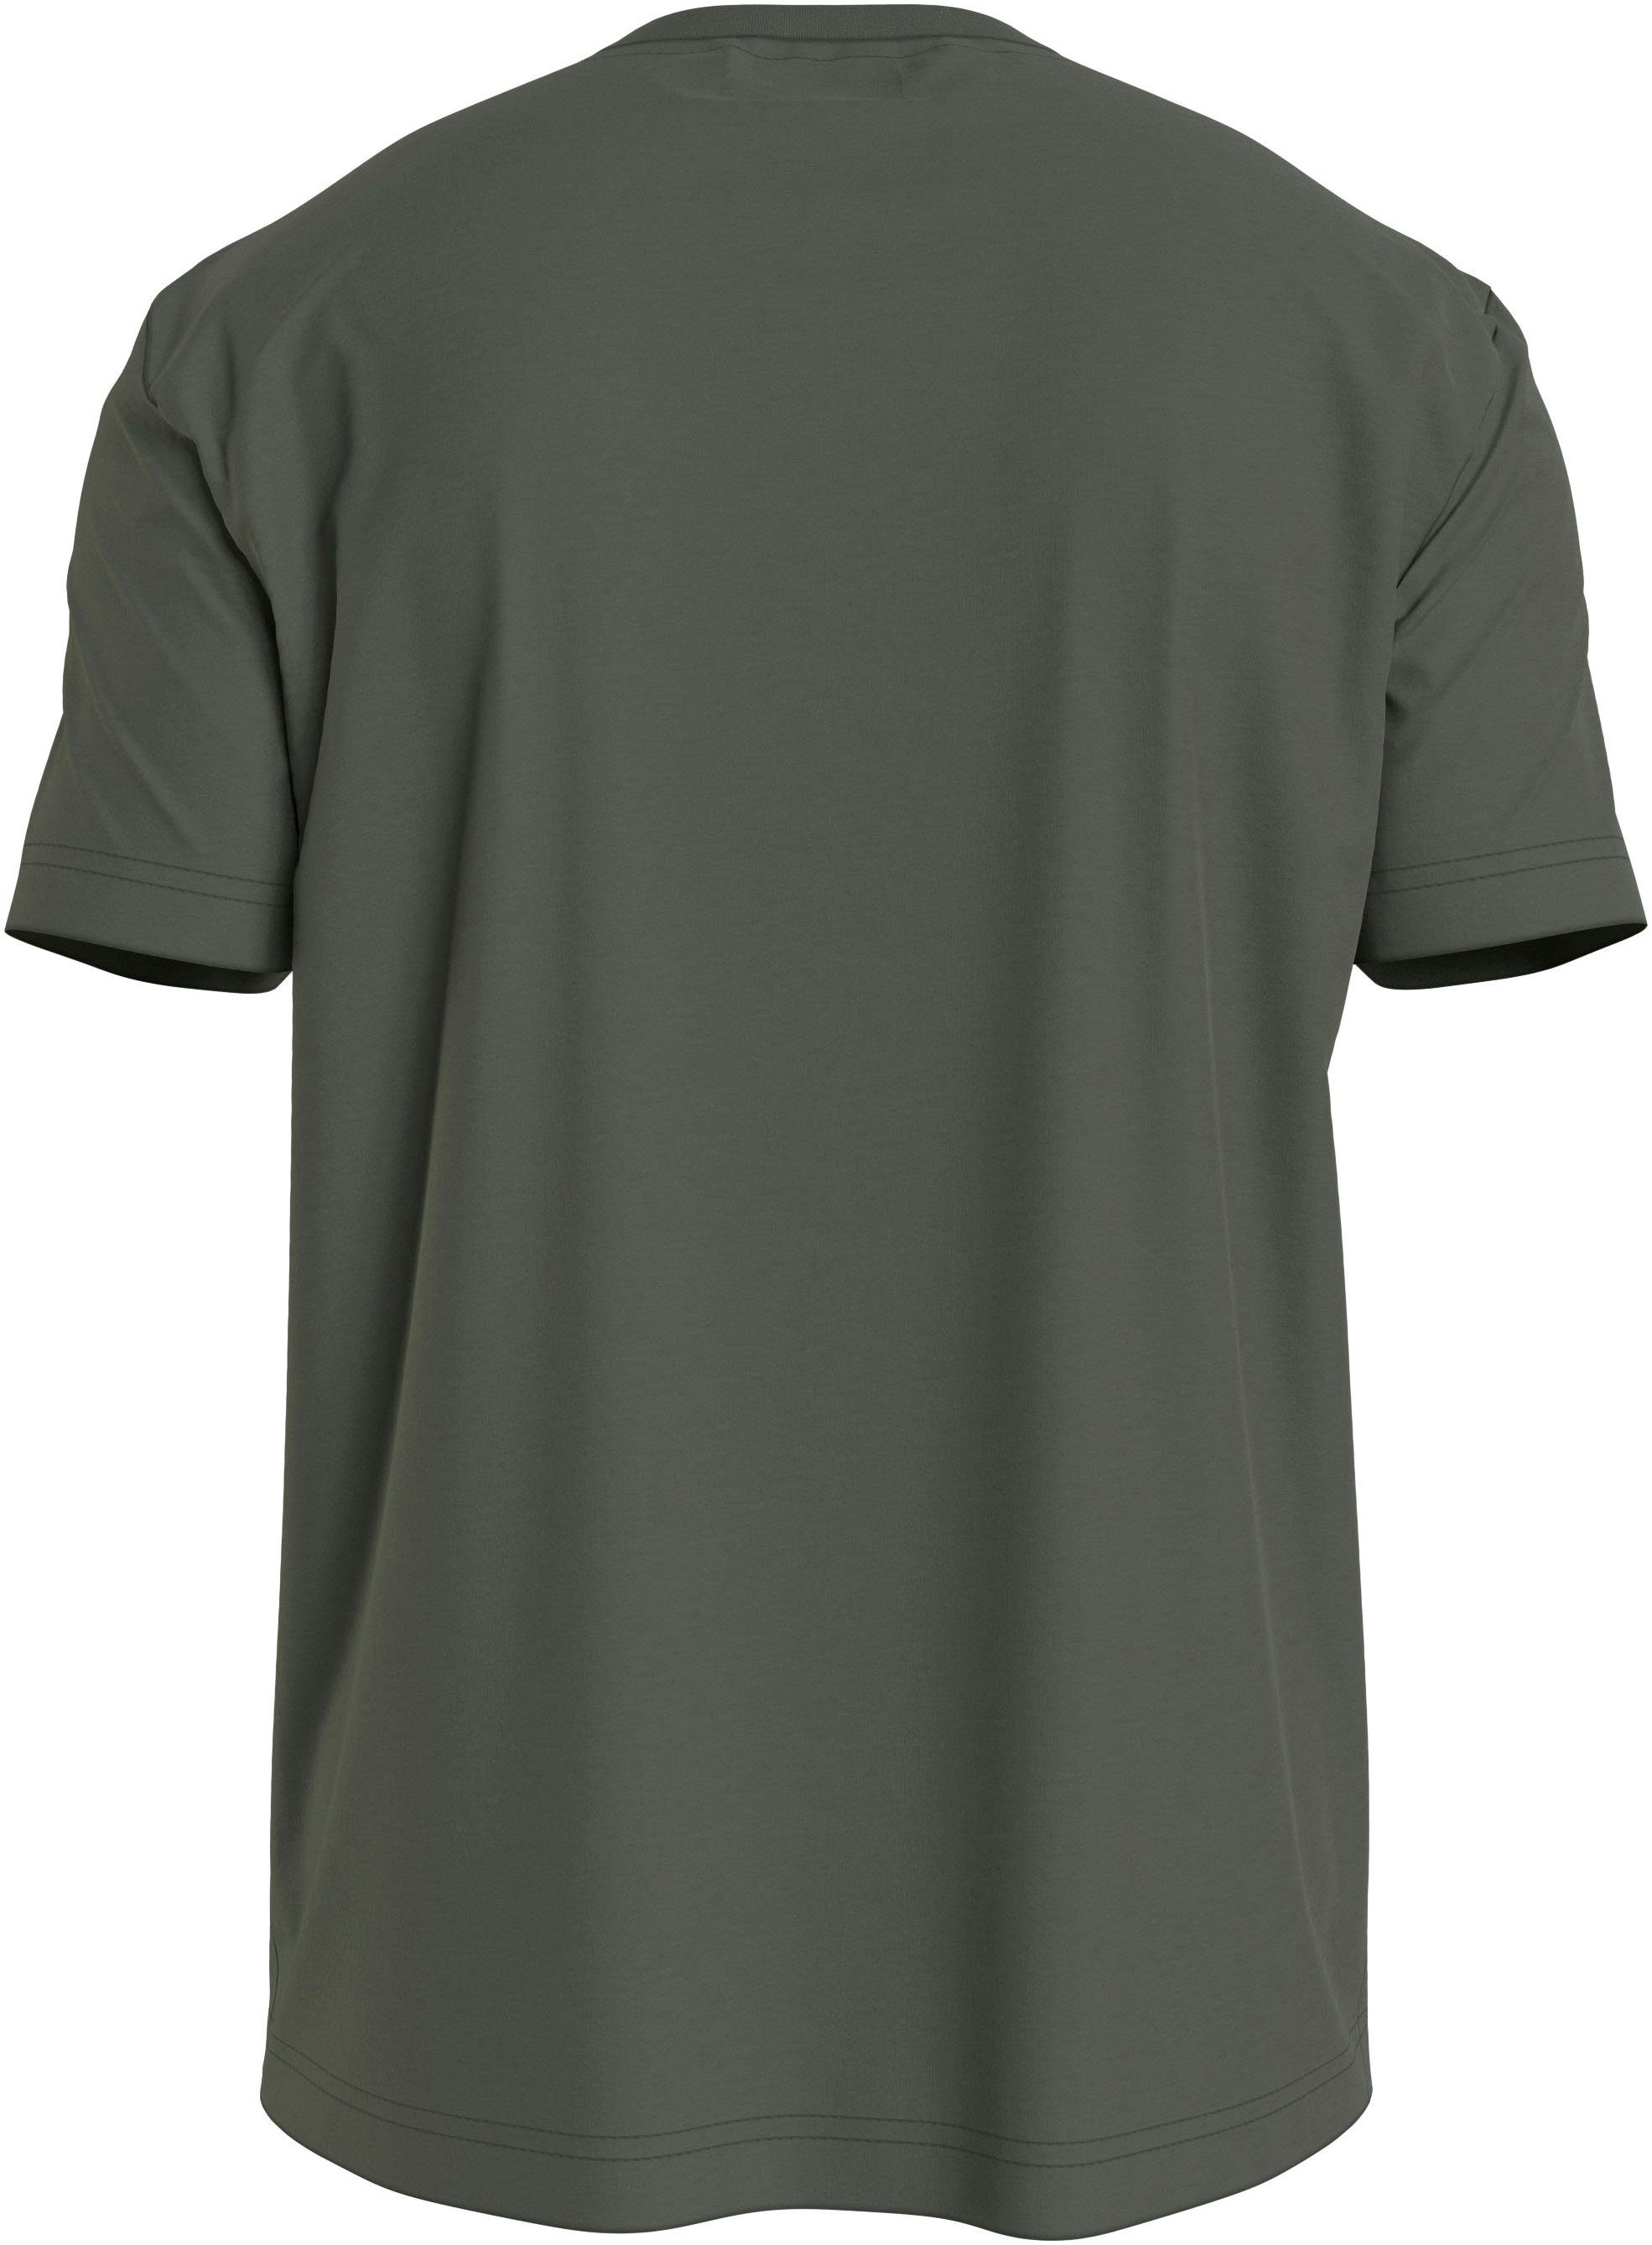 Klein Markenlabel T-Shirt Calvin MULTI T-SHIRT COLOR mit Thyme LOGO